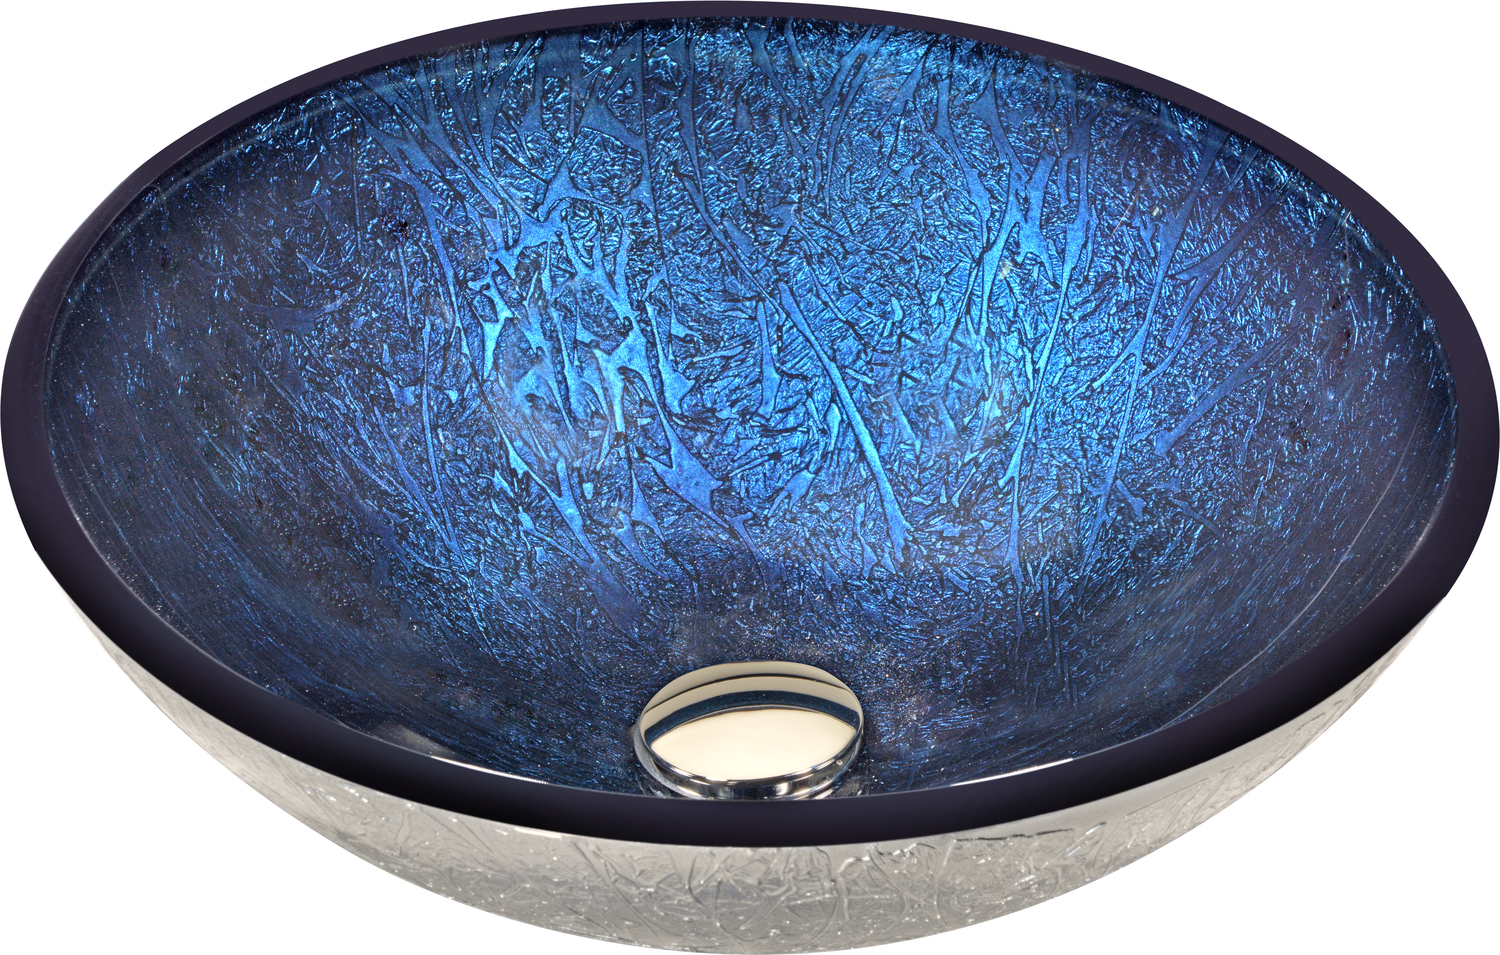 vanity blue Anzzi BATHROOM - Sinks - Vessel - Tempered Glass Gray